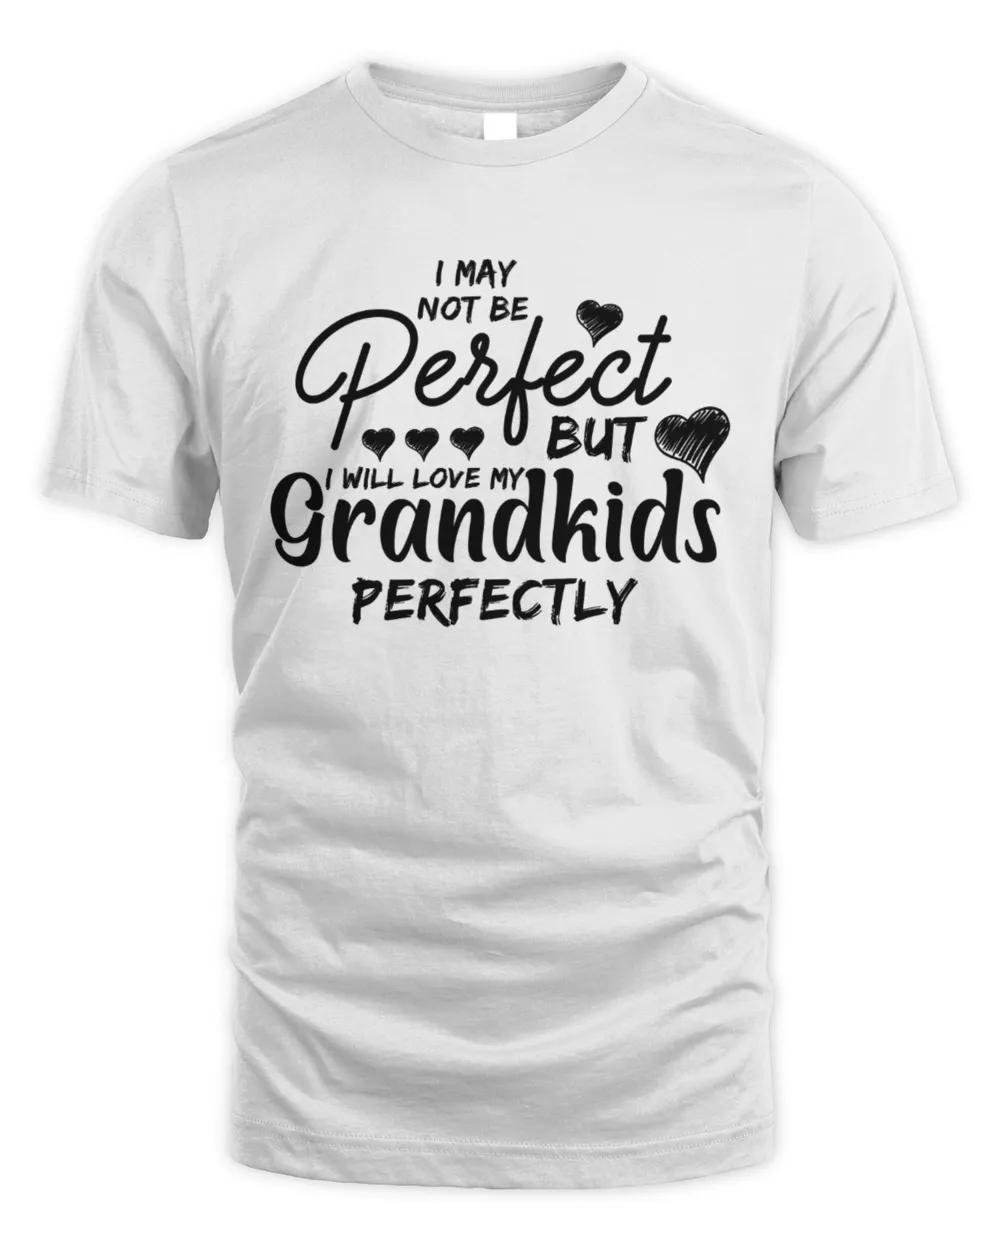 I may not perfect but i will | Grandma shirt, Nana shirt, Granny Shirt, Gramma Shirt, Mother Day Gift, Grandma Birthday Gift